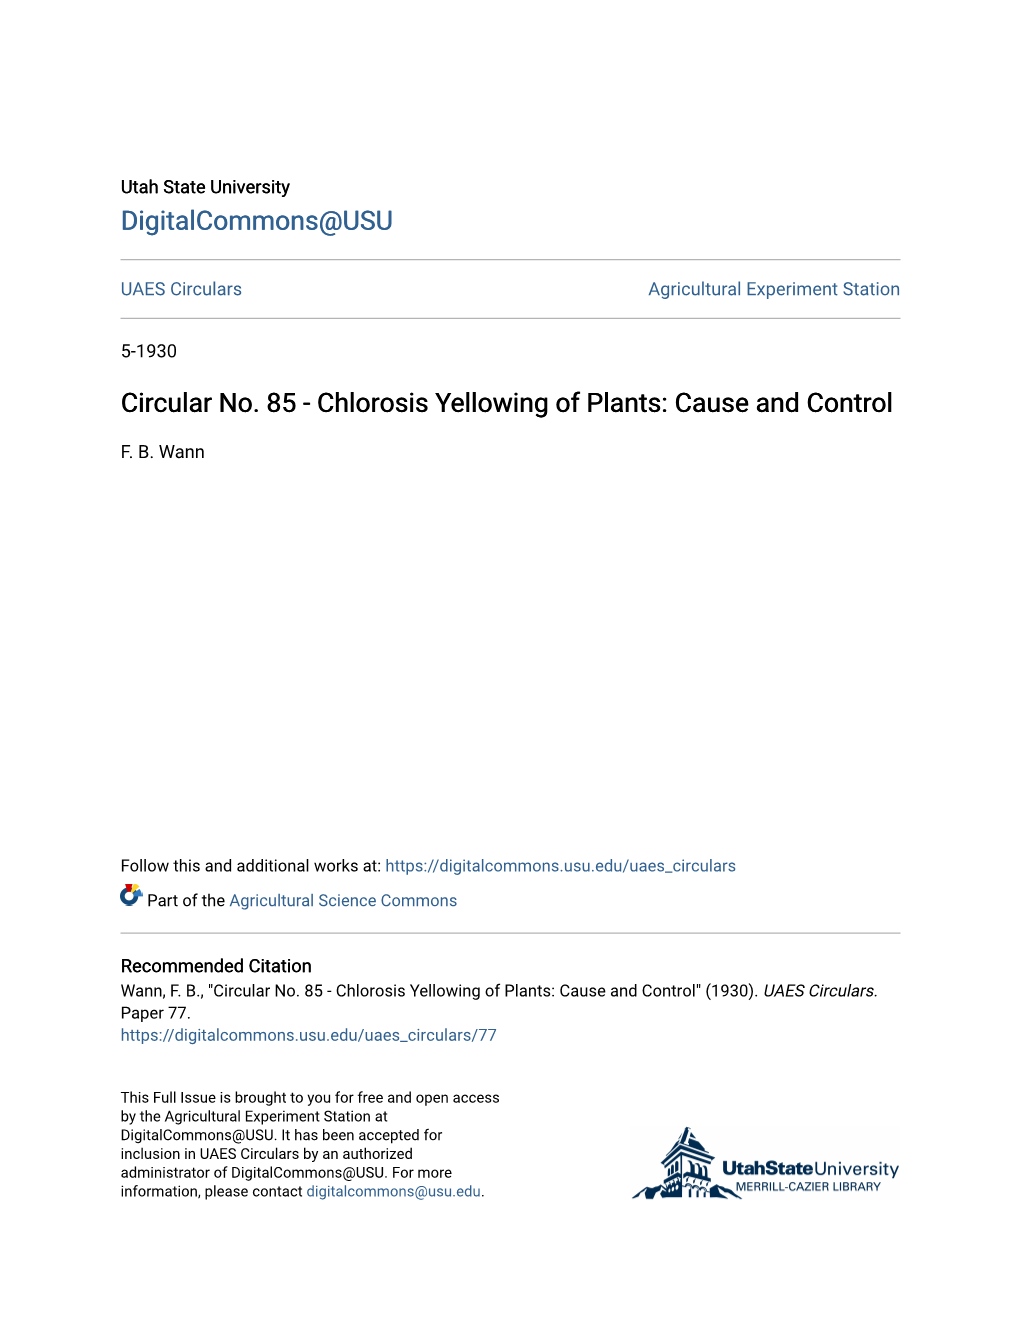 Circular No. 85 - Chlorosis Yellowing of Plants: Cause and Control